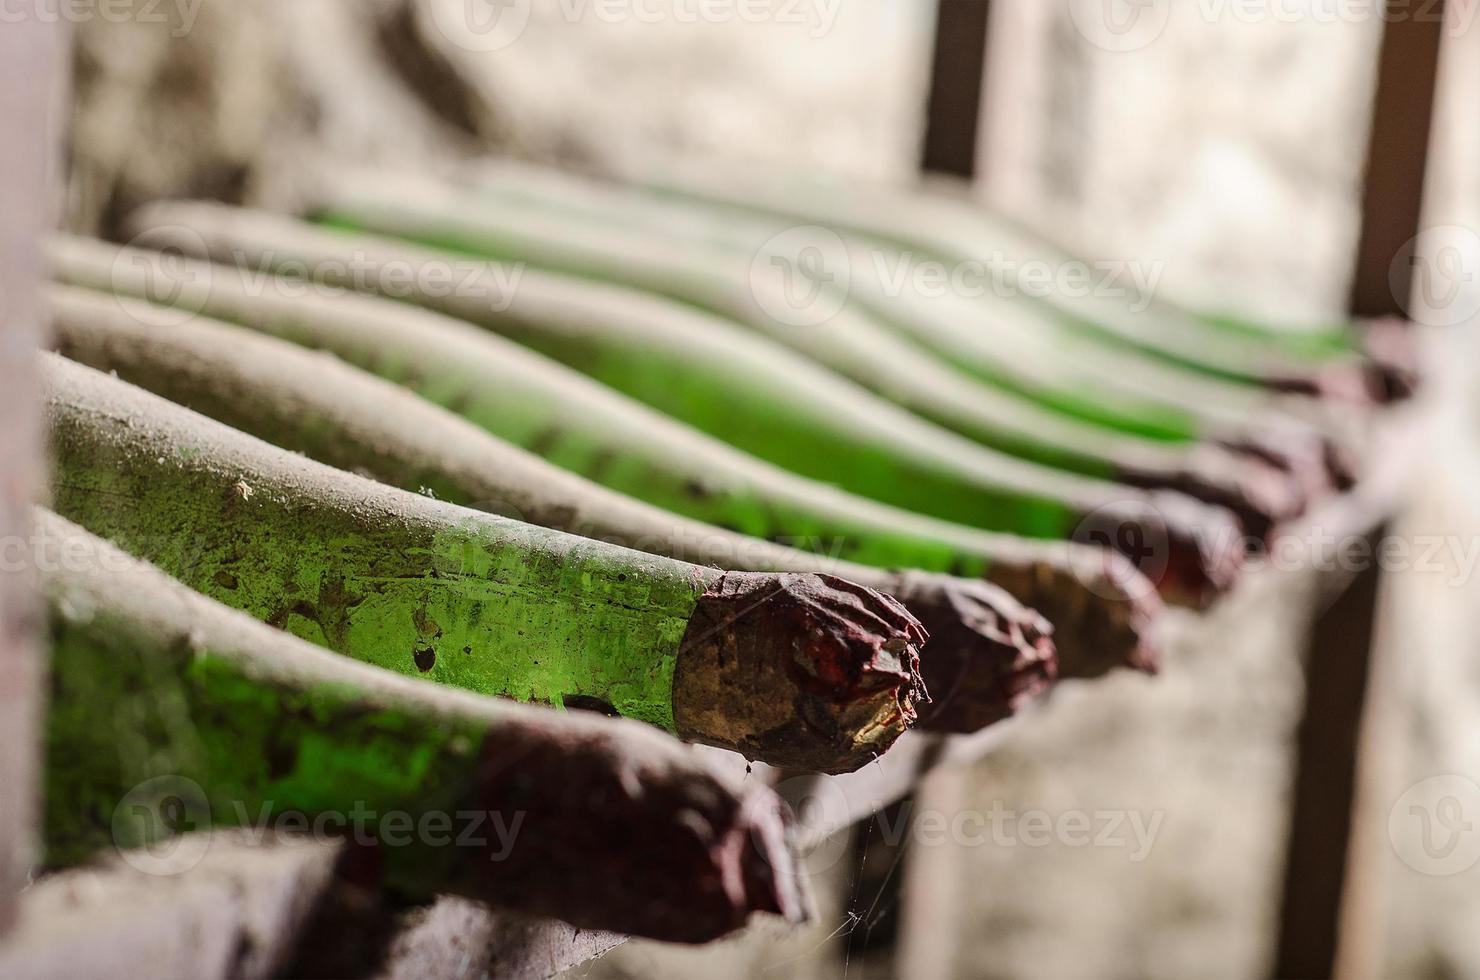 gamla dammiga vinflaskor i källaren foto